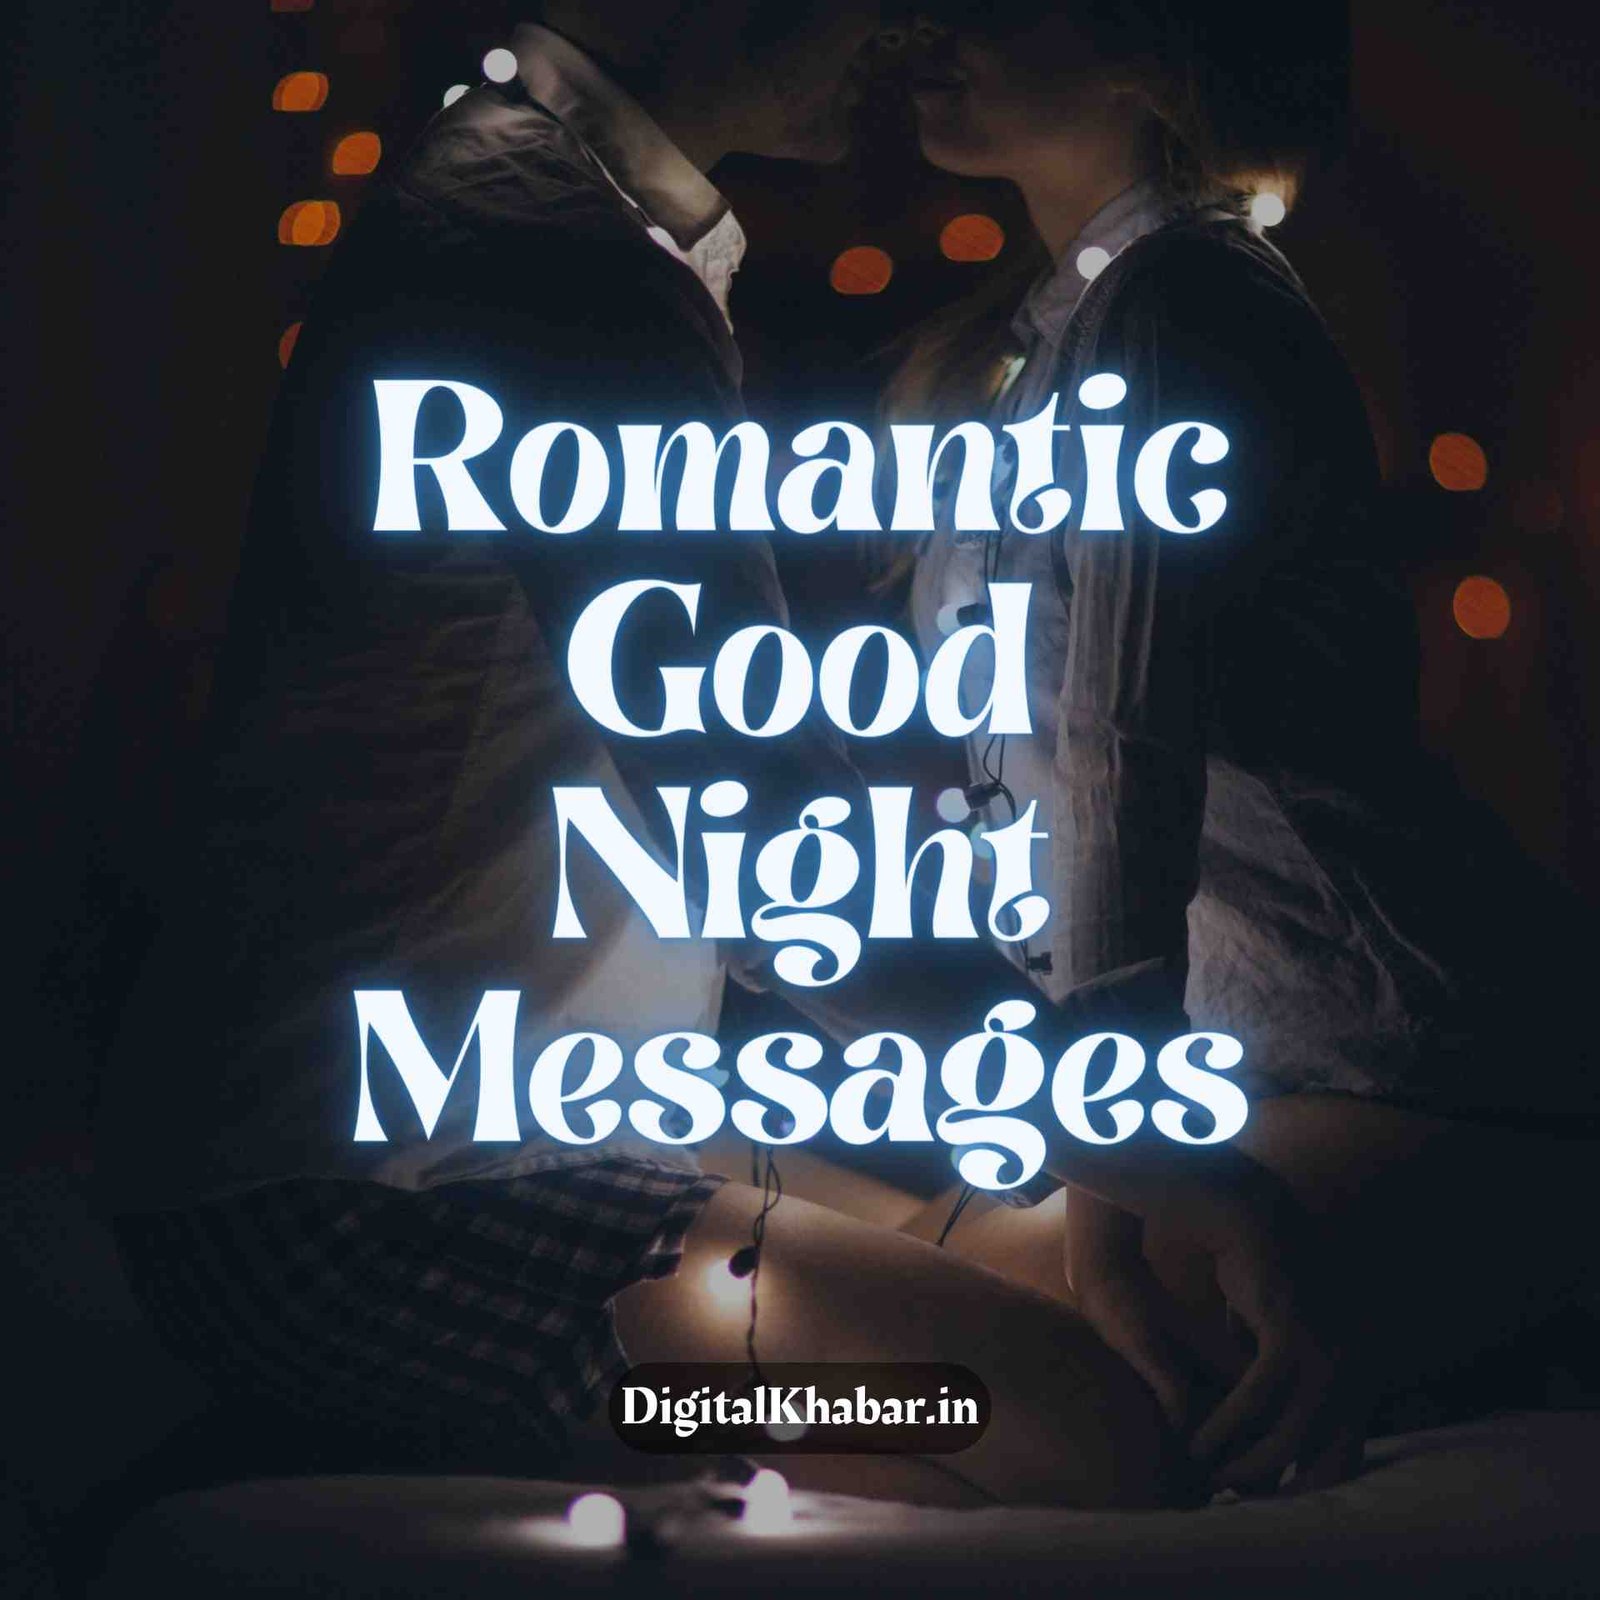 Romantic Good night messages English